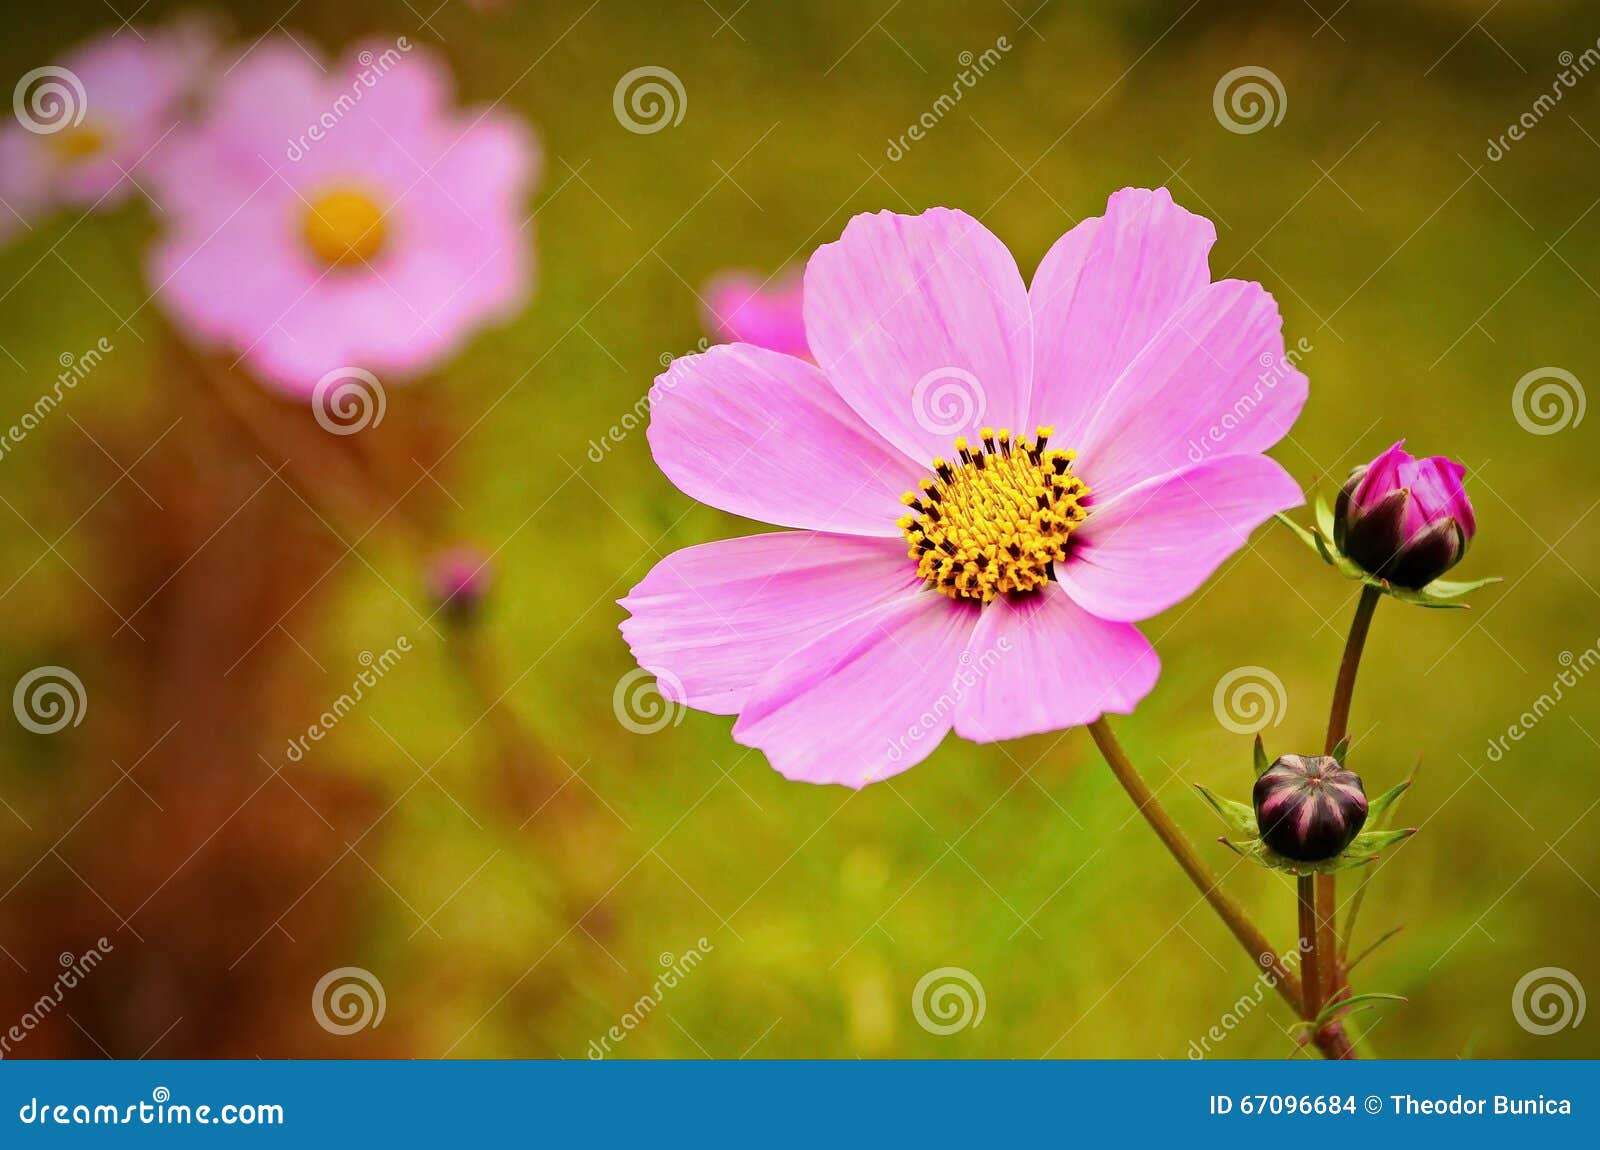 cosmea flower. summer background